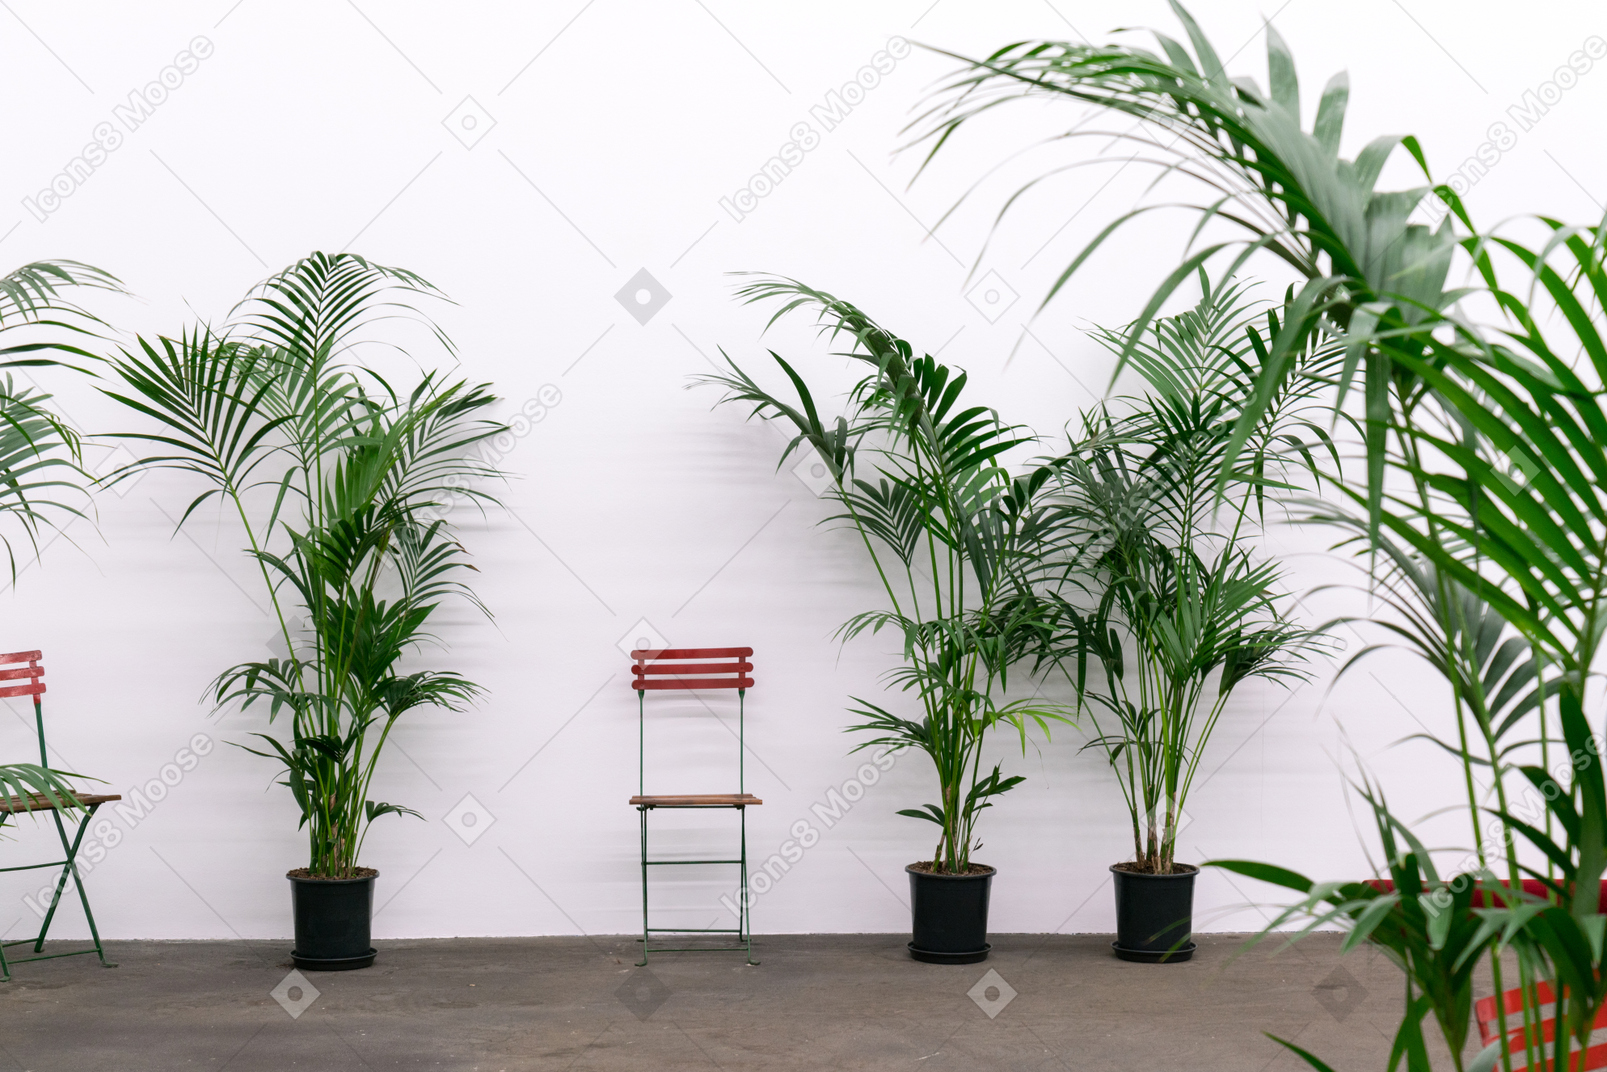 Dos sillas rodeadas de plantas en macetas